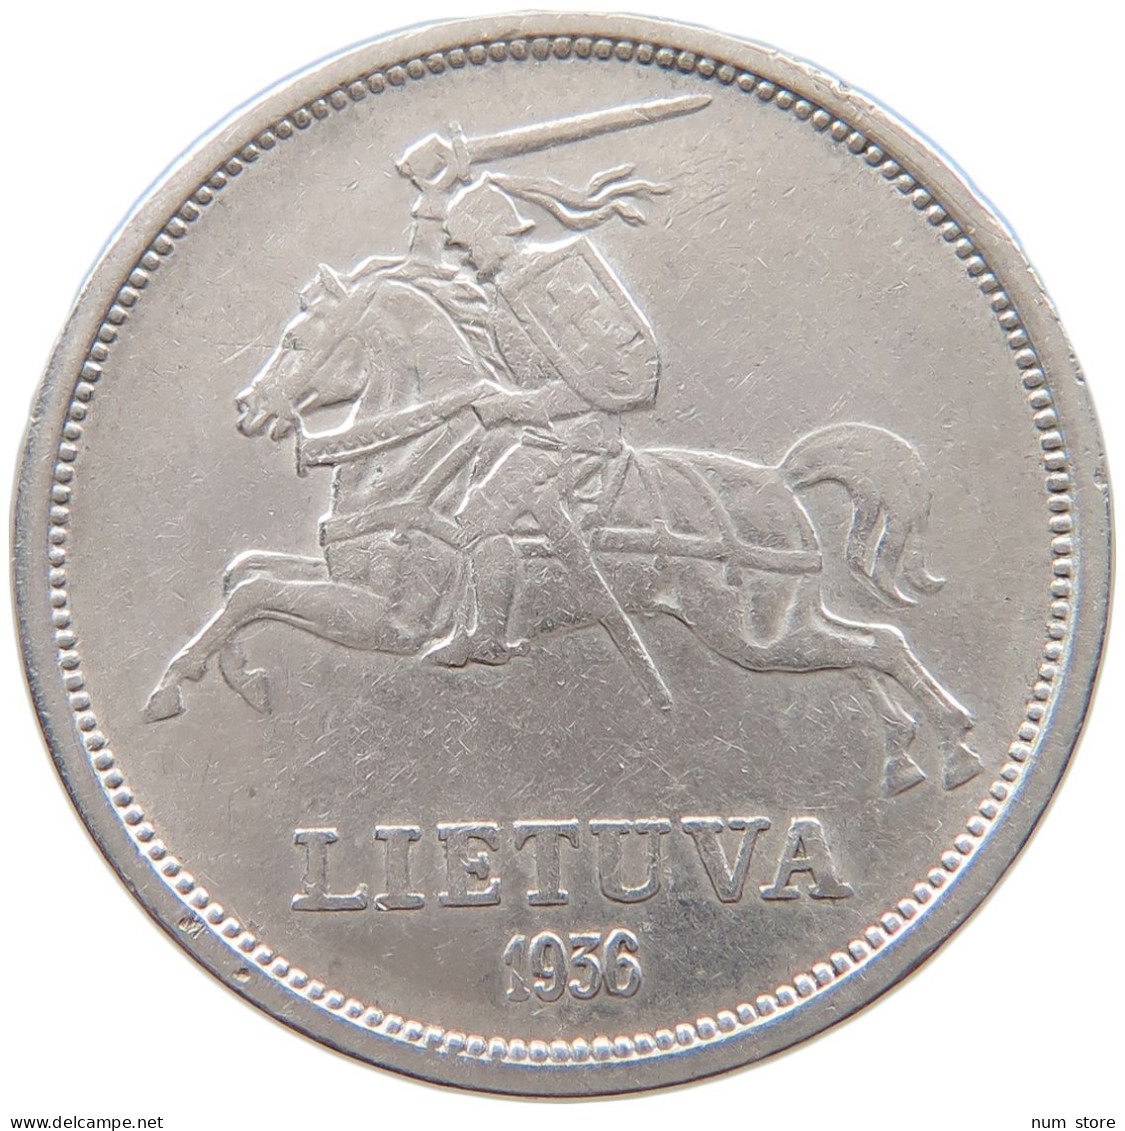 LITHUANIA 5 LITAI 1936 #t028 0575 - Lithuania